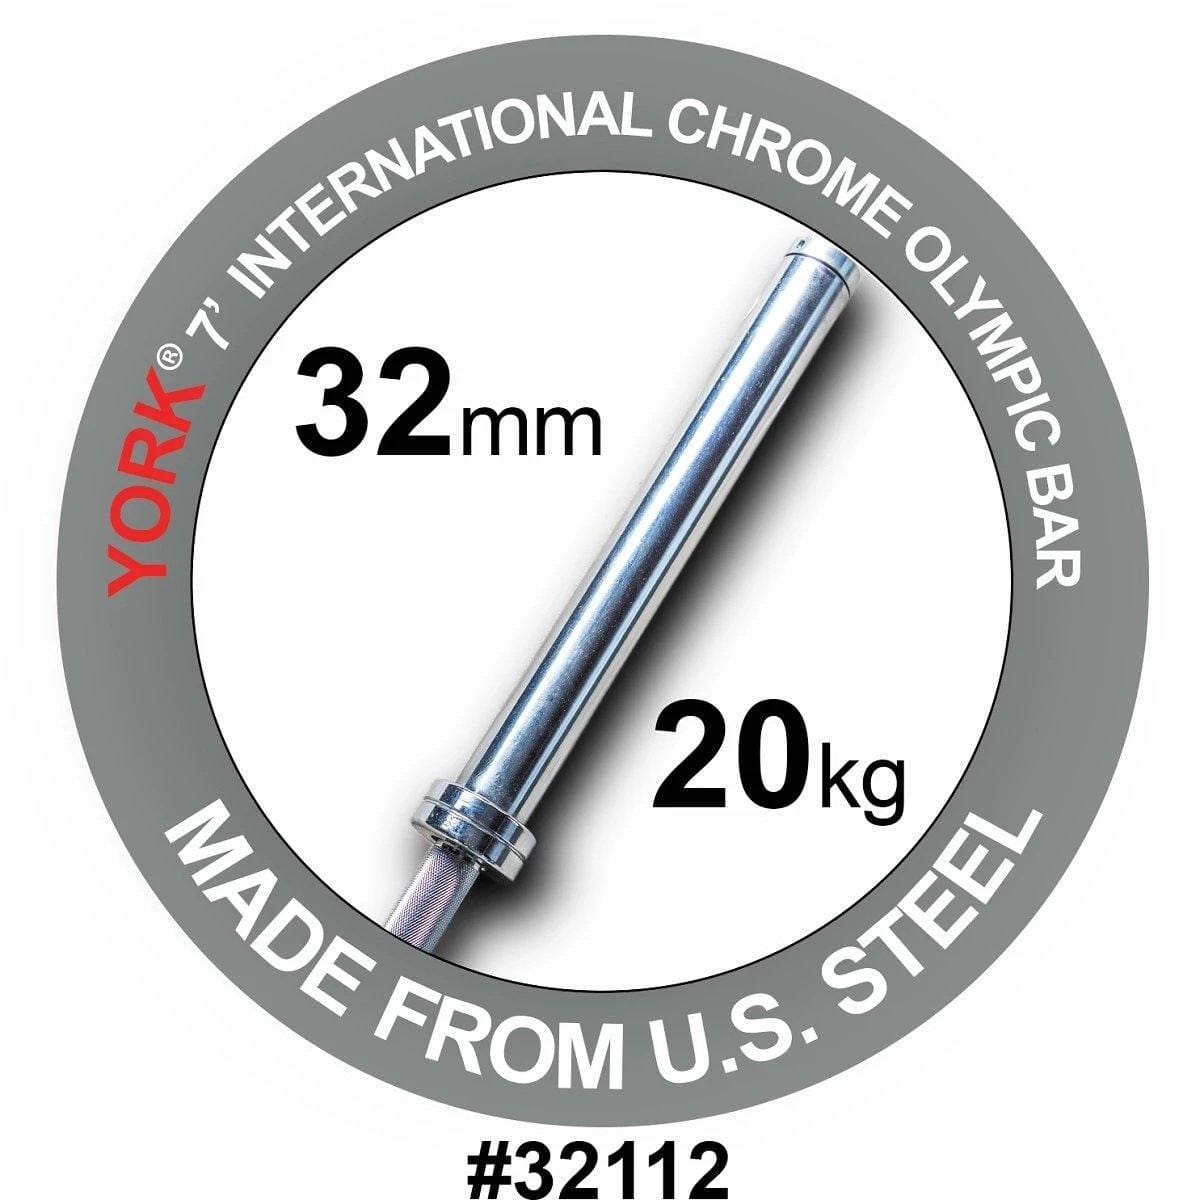 York Barbell 7' International Chrome Olympic Bar 32mm